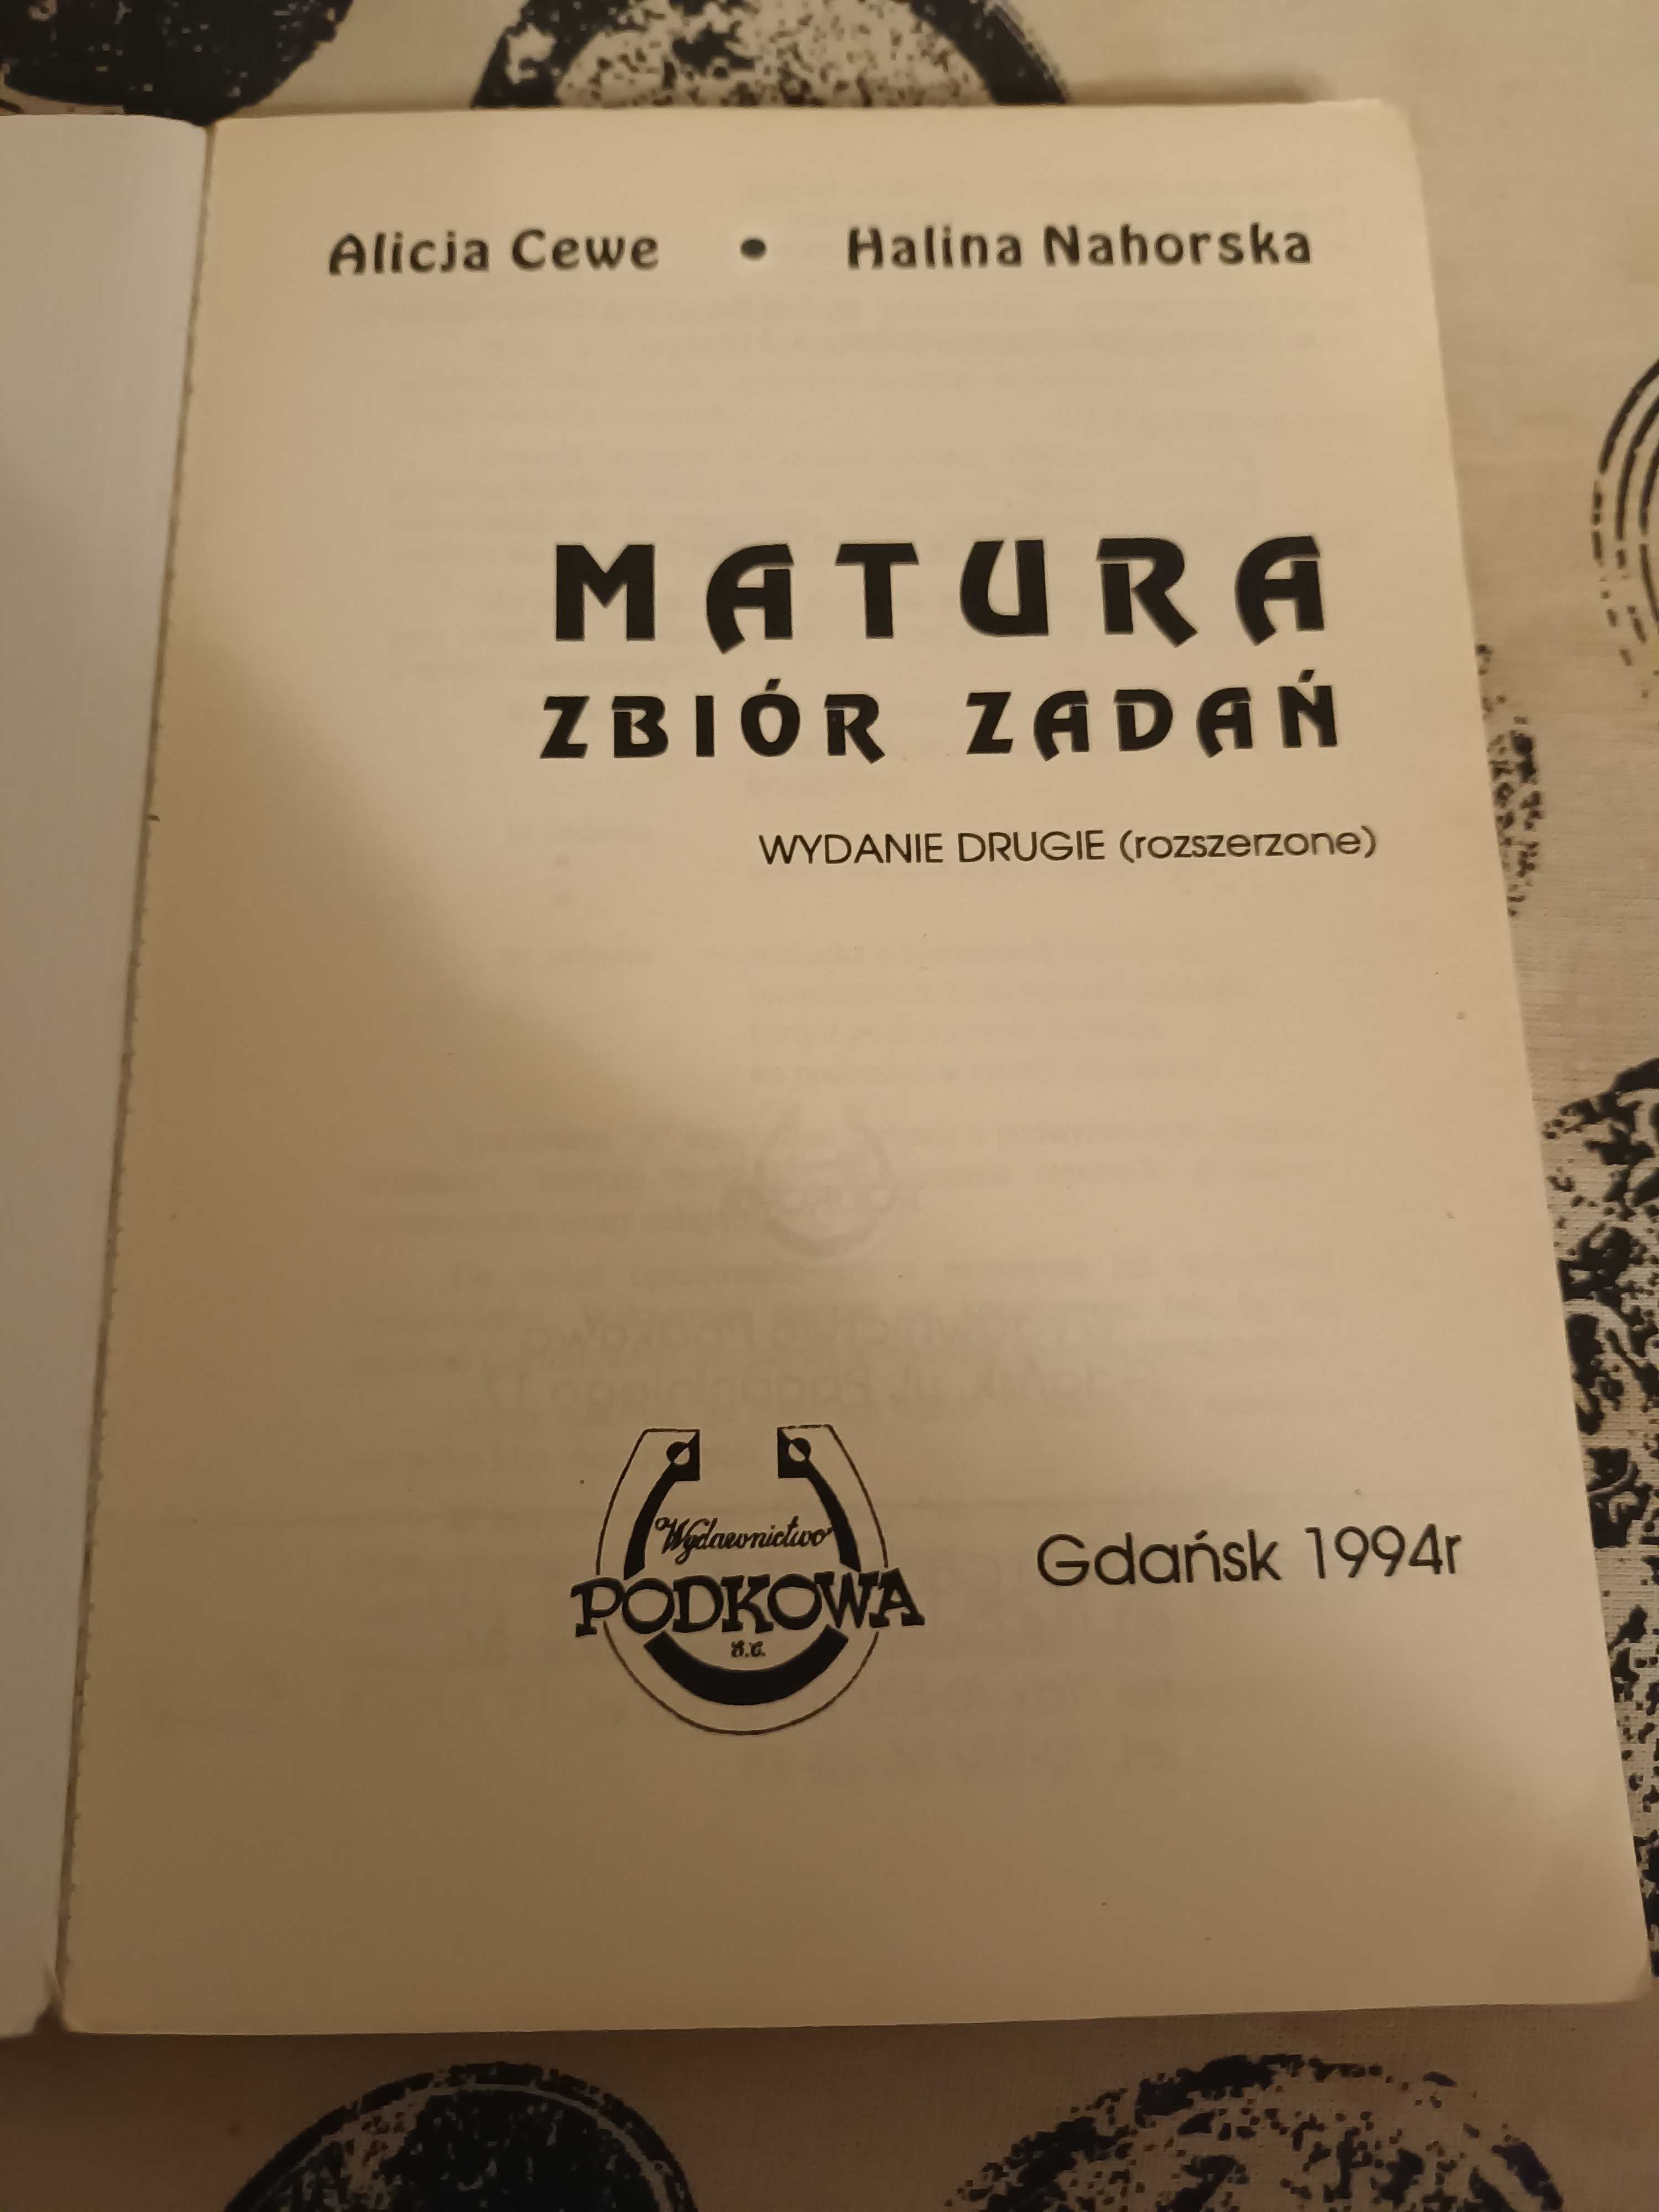 Zbiór zadań maturalnych, Zachorska, Cewe, Gdańsk 1994